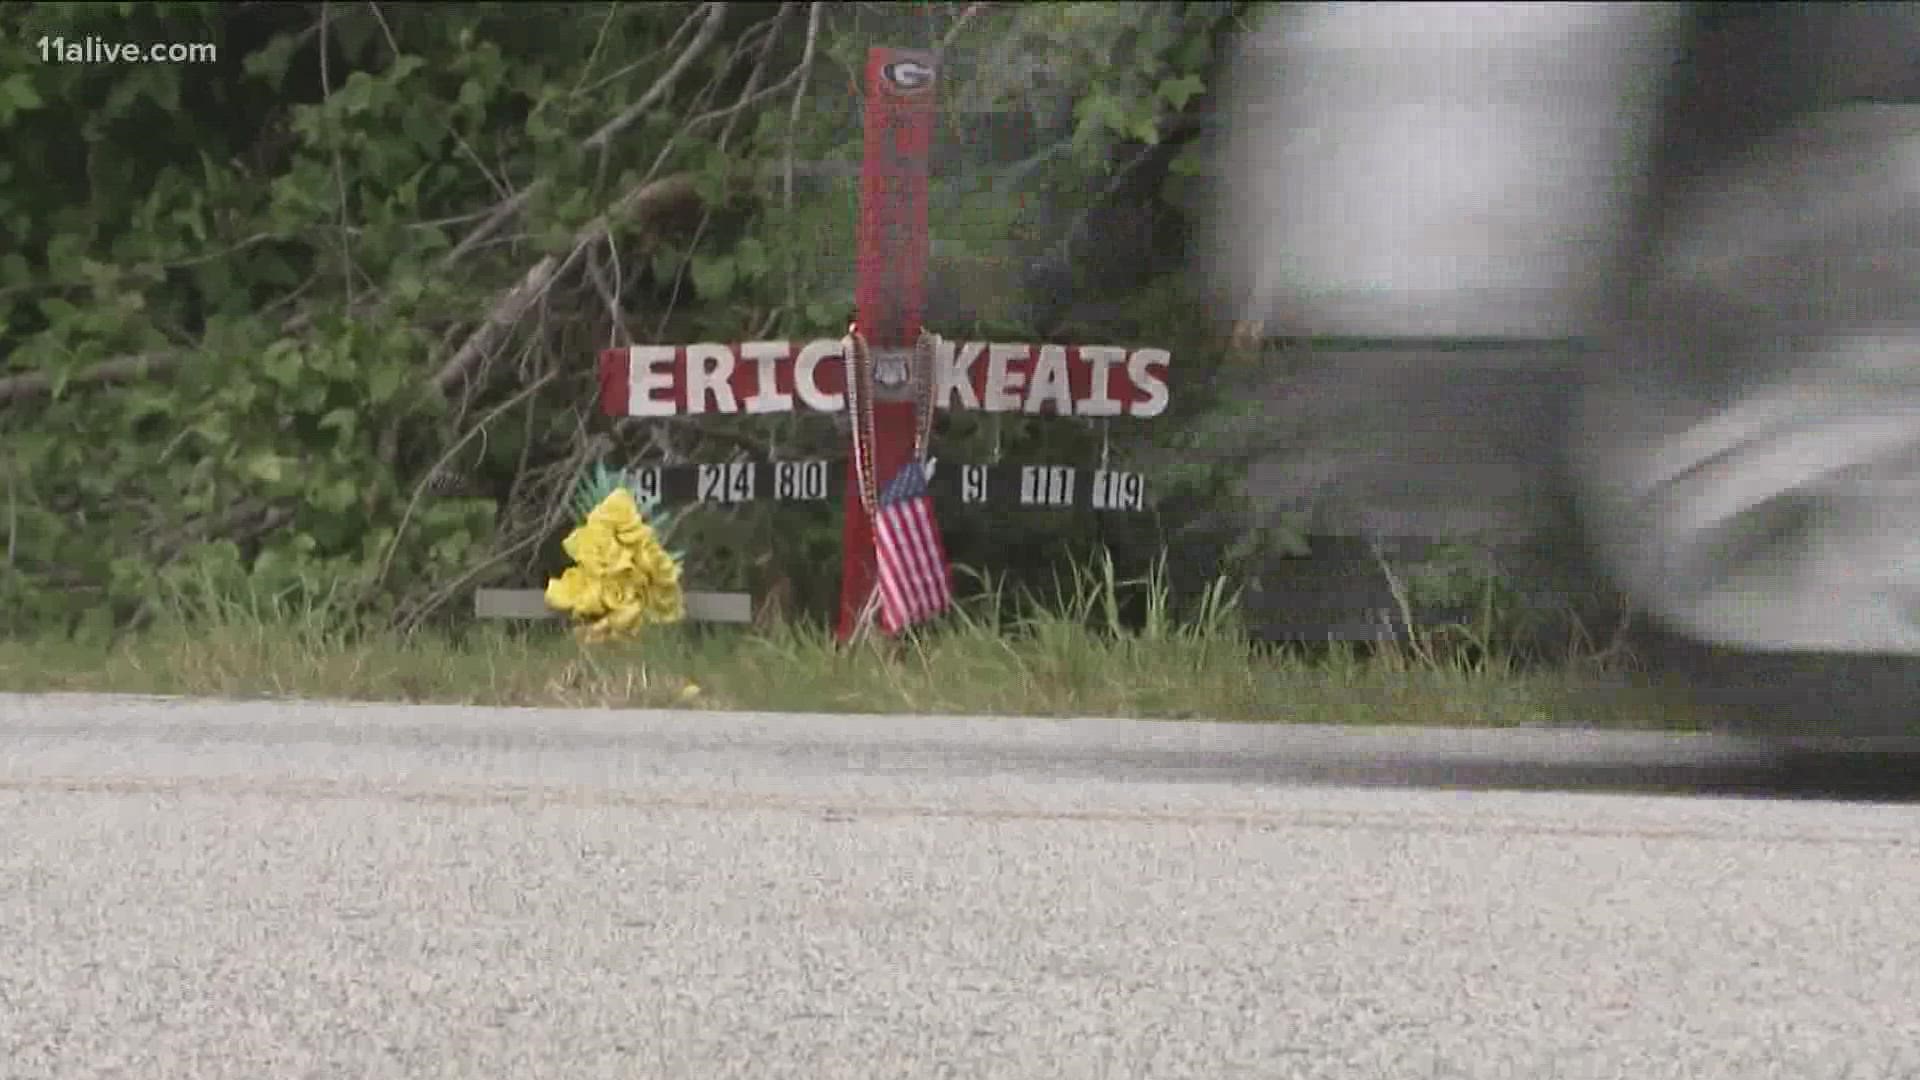 Authorities said Ralph “Ryan” Dover III hit Eric Keais in the northwest Georgia town of Cedartown with his SUV.